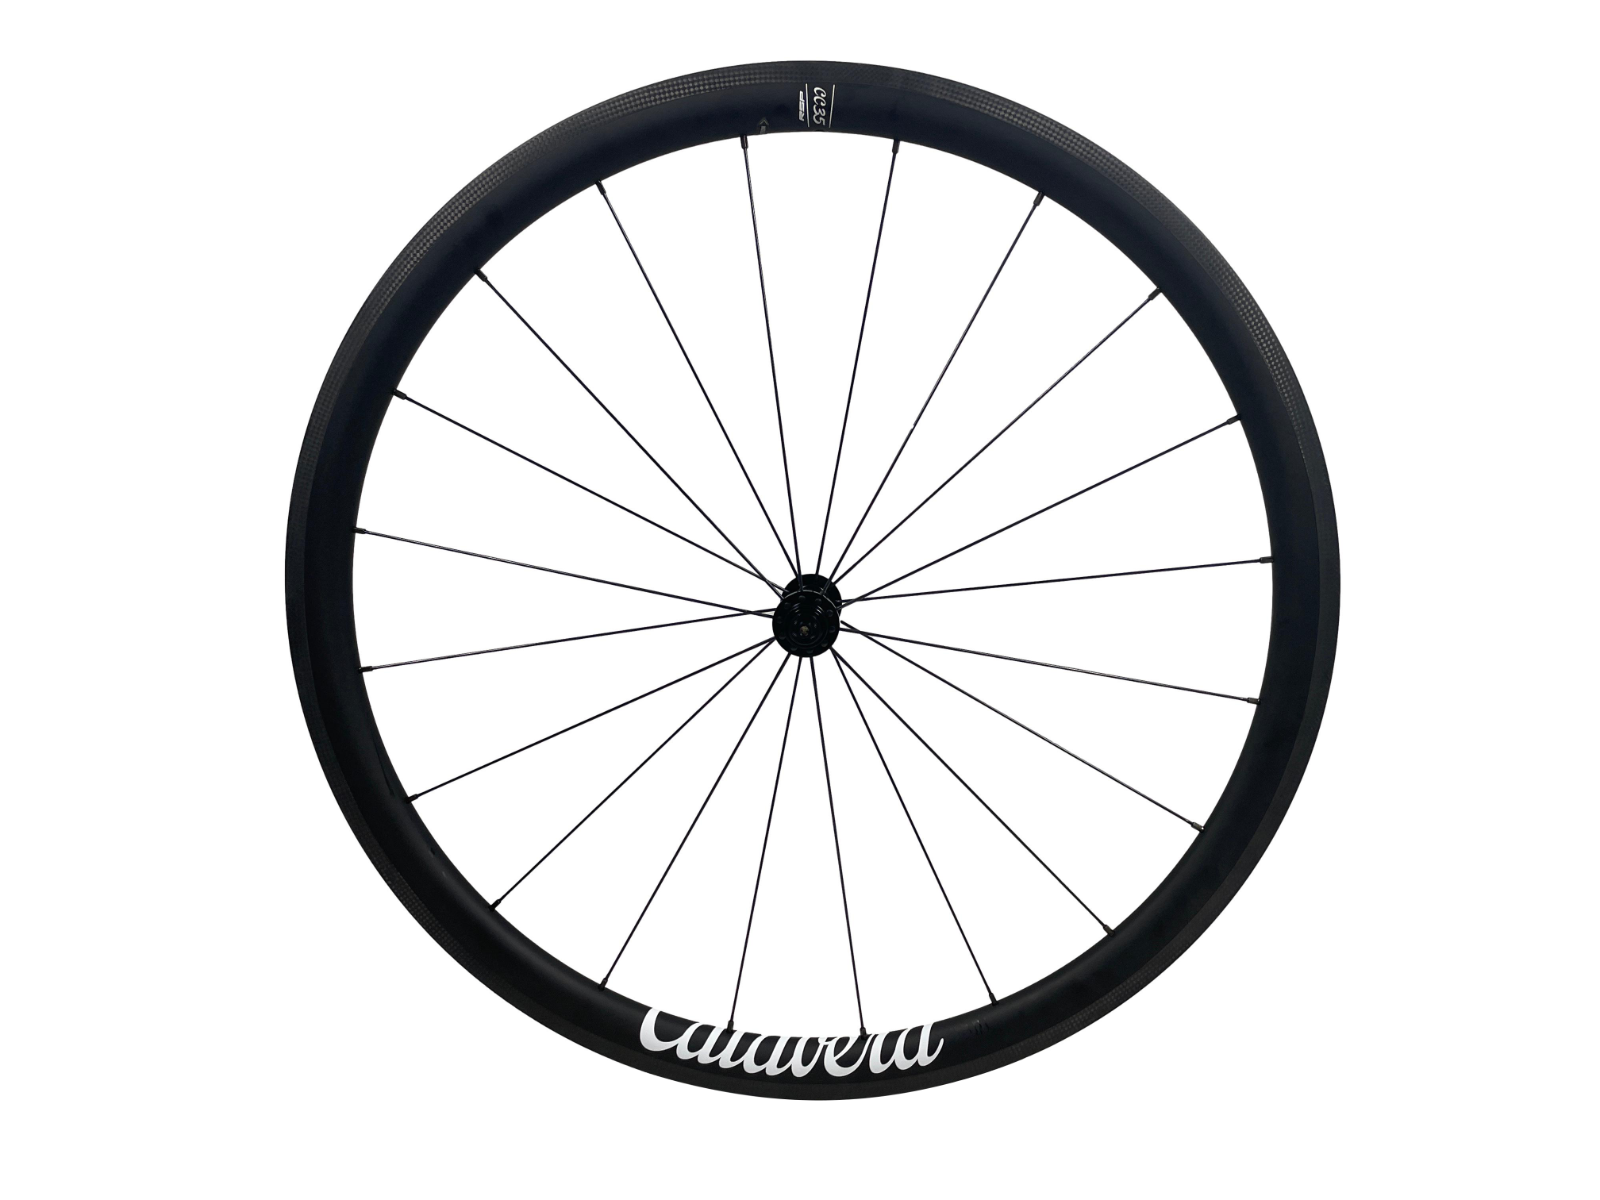 RSP Calavera CC35 Carbon Road Bike Front Wheel - 700c - 35mm Rim - RRP: £387 - Sportandleisure.com (7115327701146)